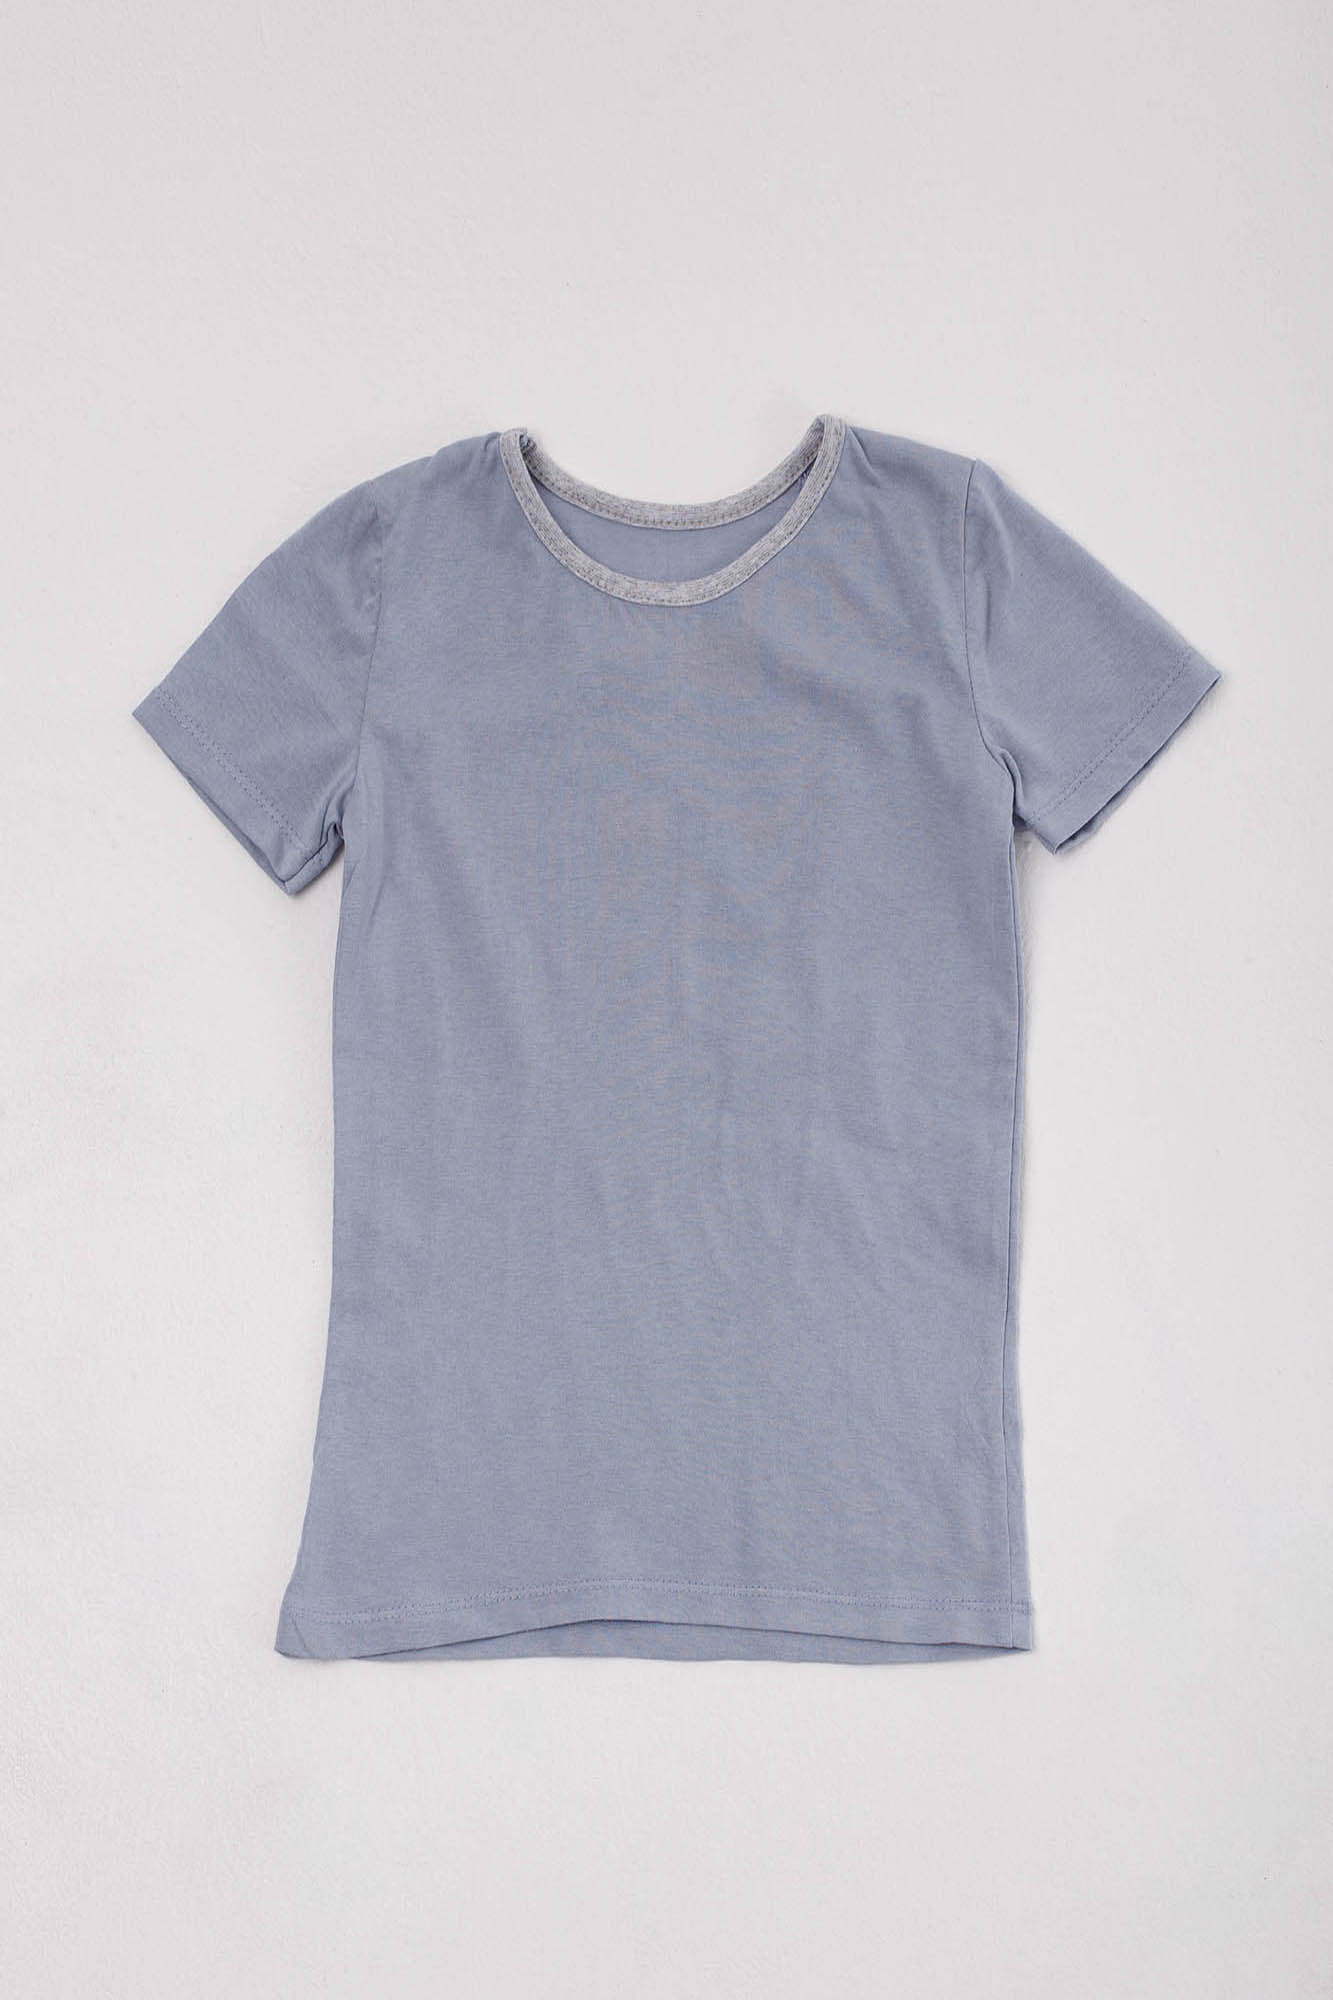 Детская футболка Aislin Цвет: Серый (9-10 лет), размер 9-10 лет